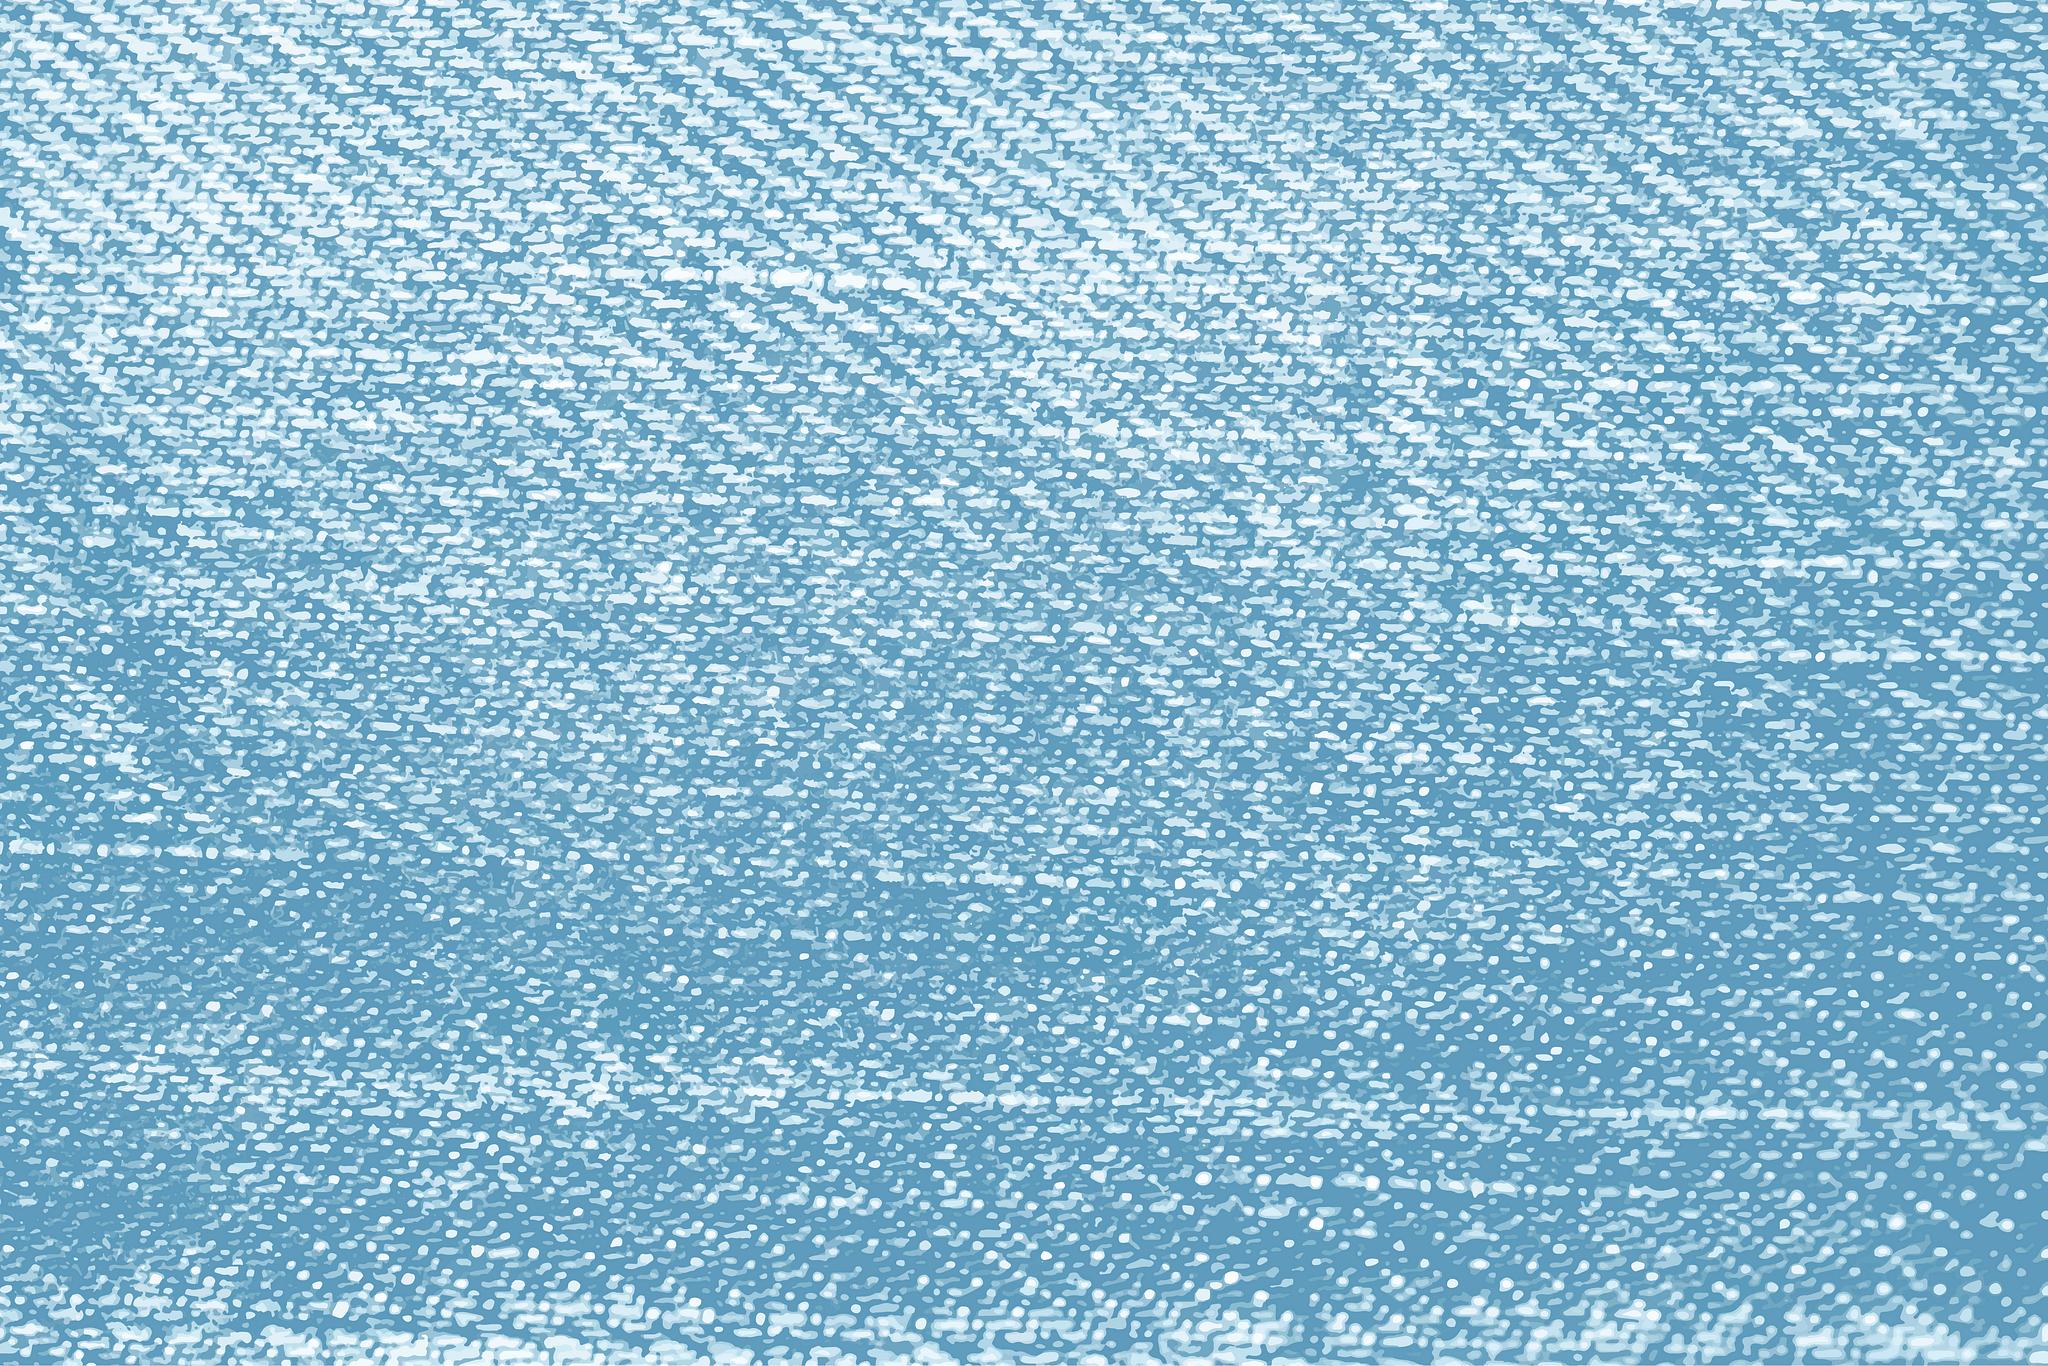 Fabric textured background | Free stock photo - 327687